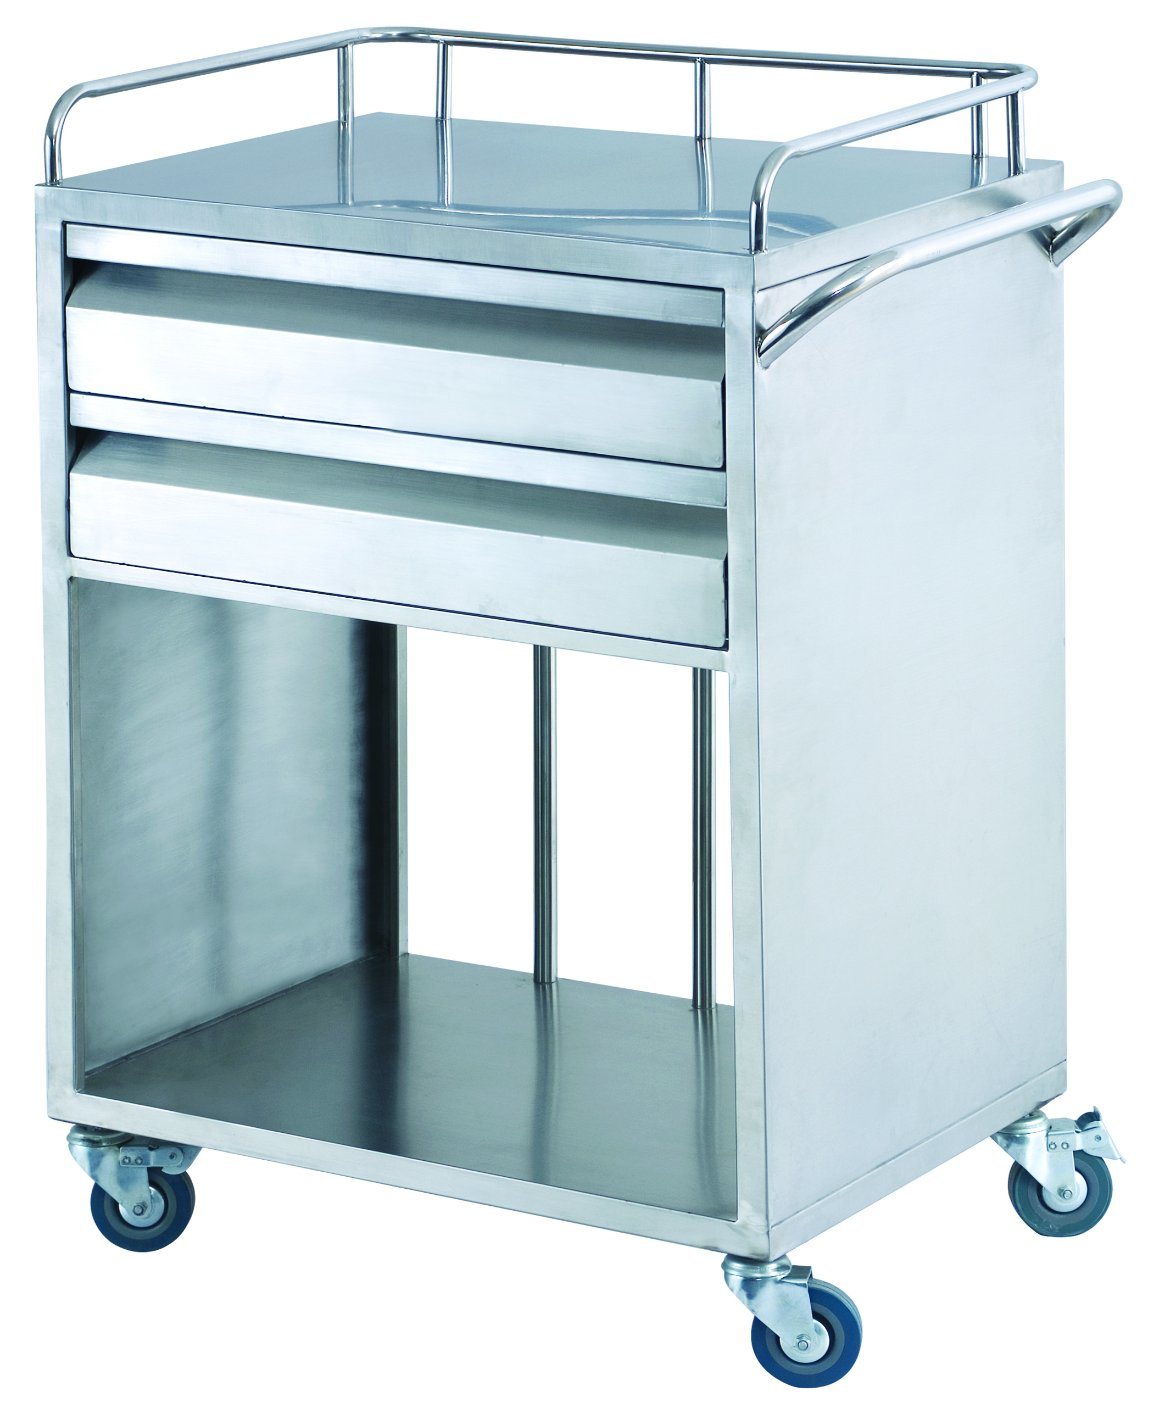 Stainless Steel Medical Medicine Trolley Carts Hospital Furniture (SLV-C4016)